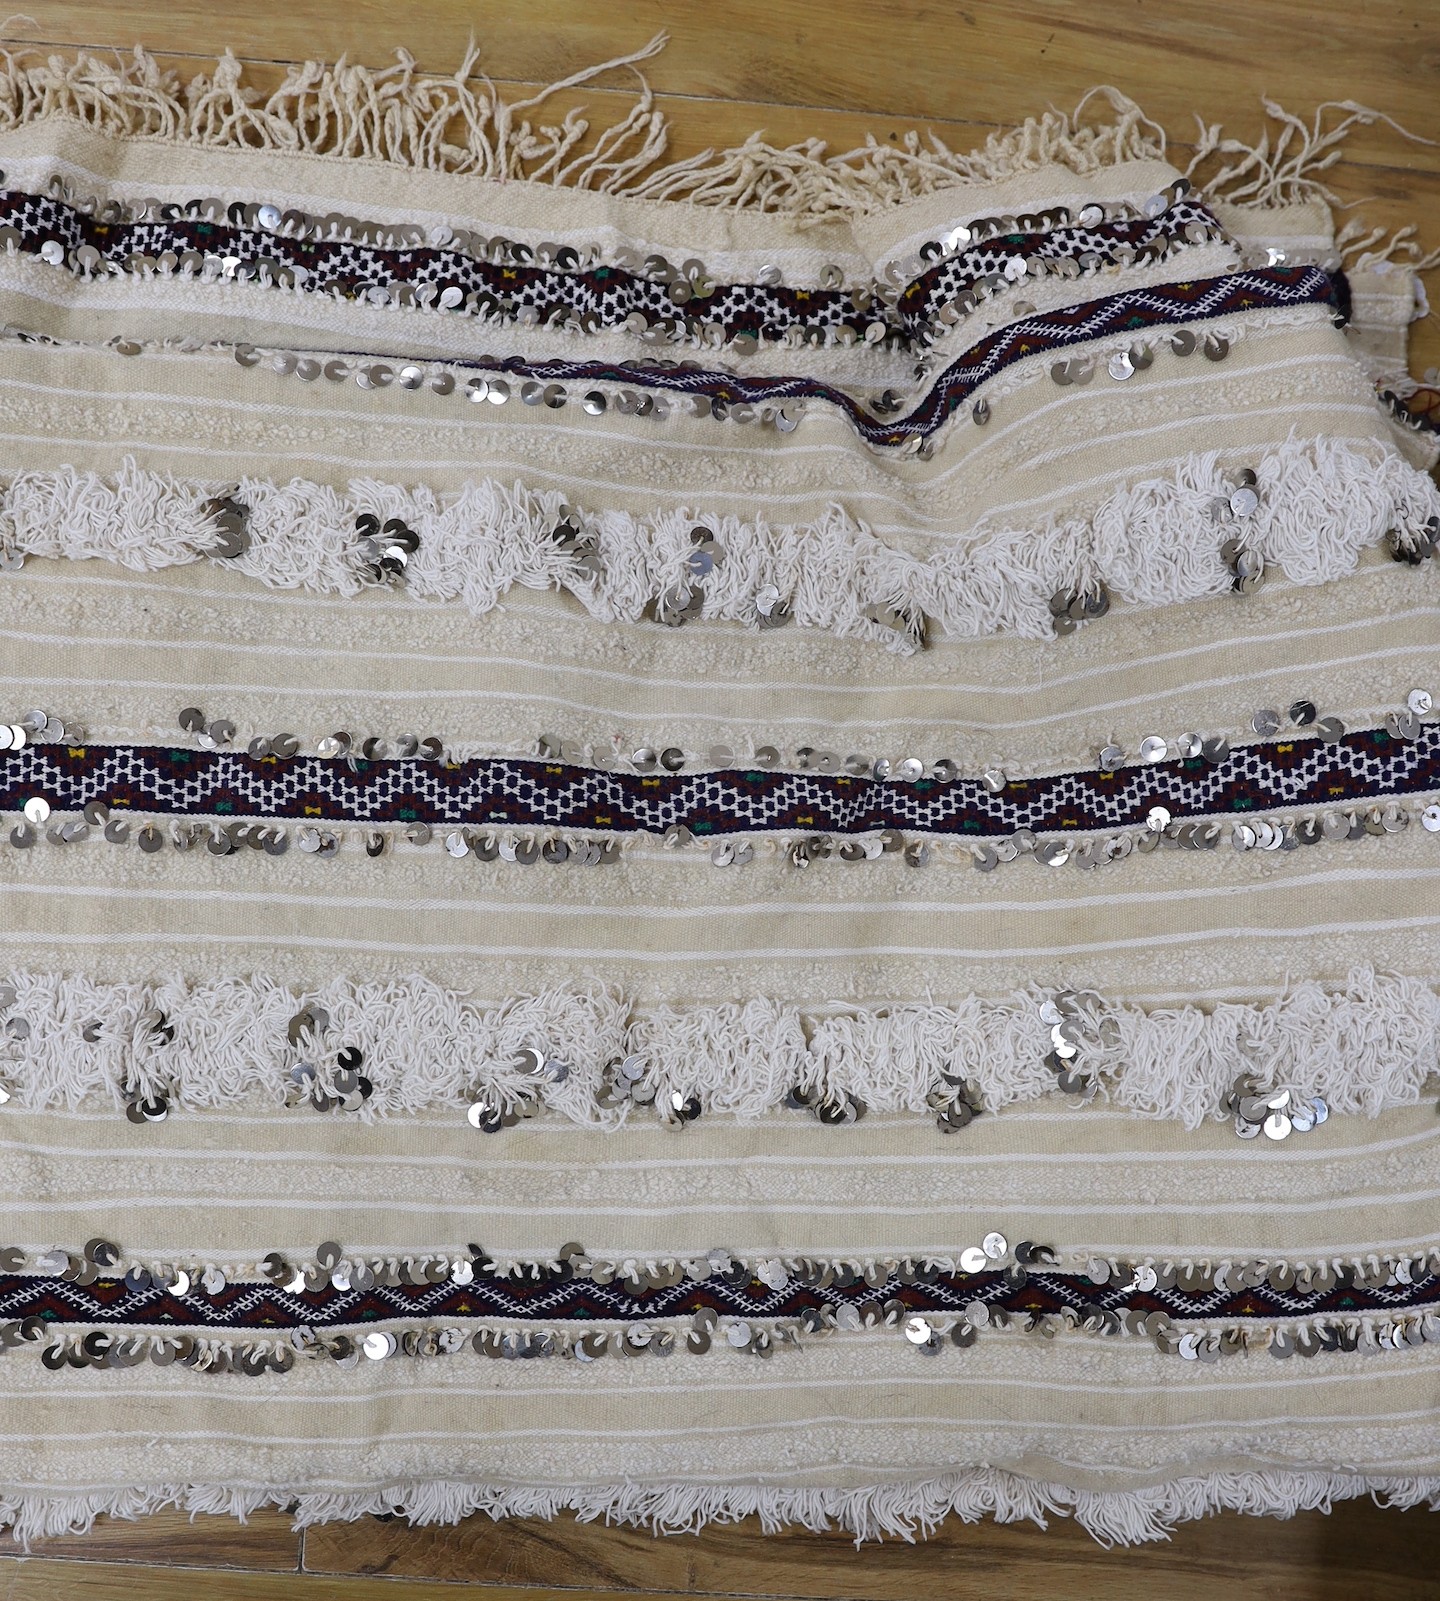 A vintage Moroccan wedding blanket